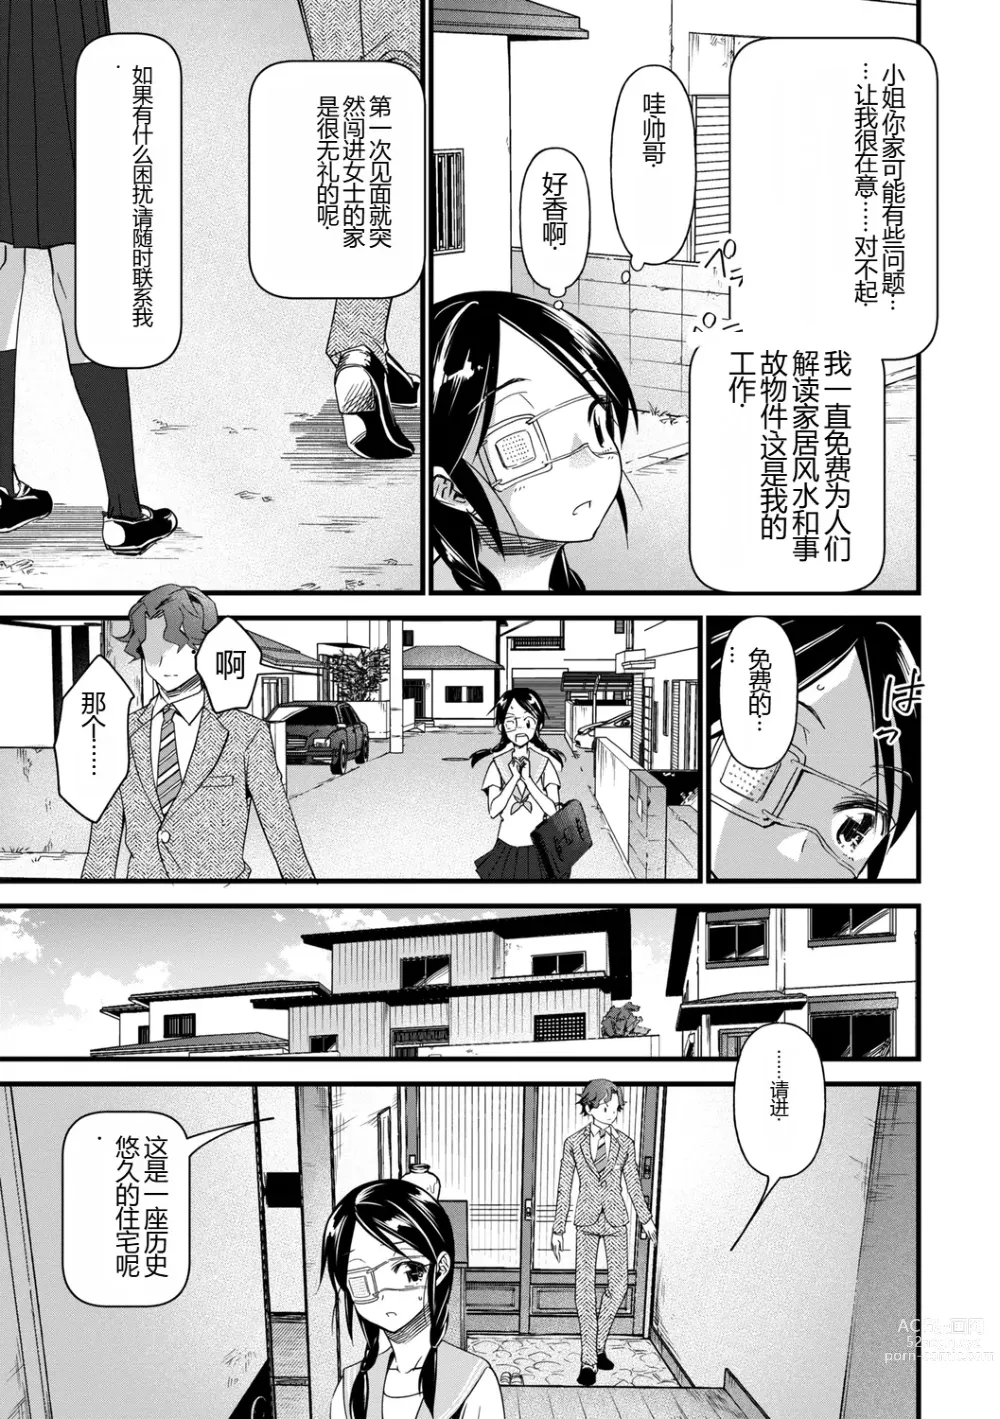 Page 11 of manga Nikugyaku Egoism